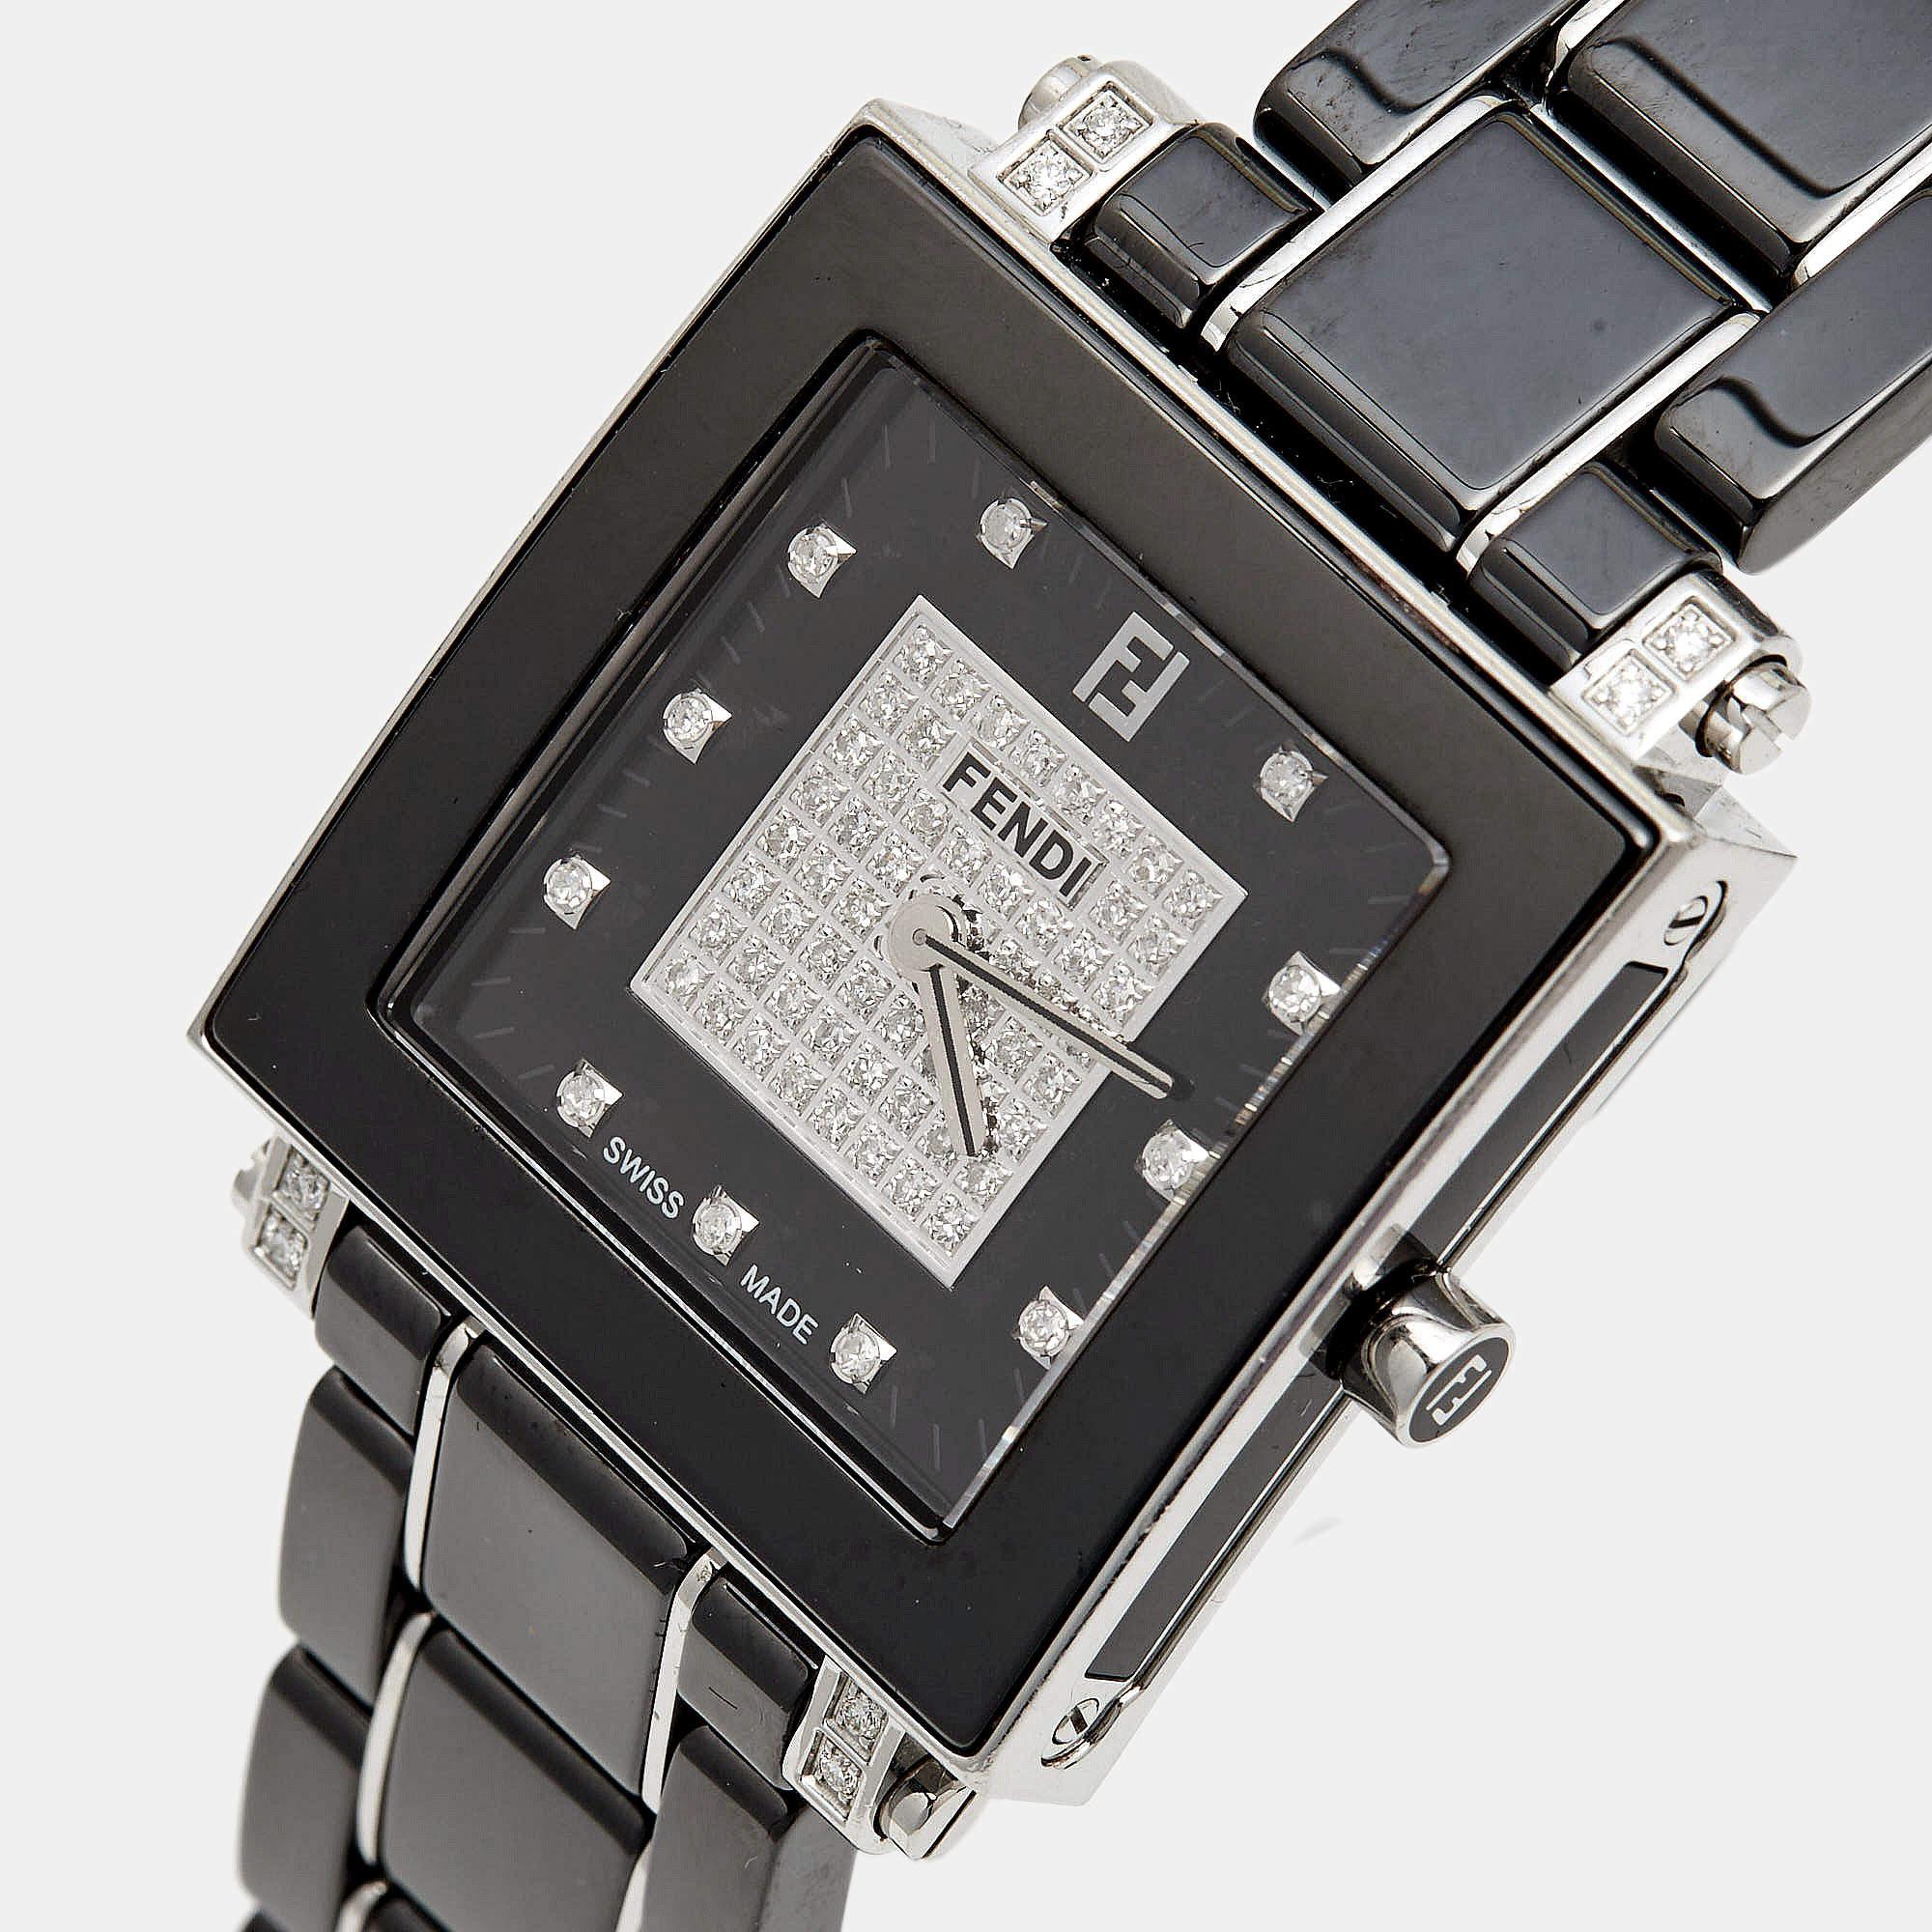 fendi black watch